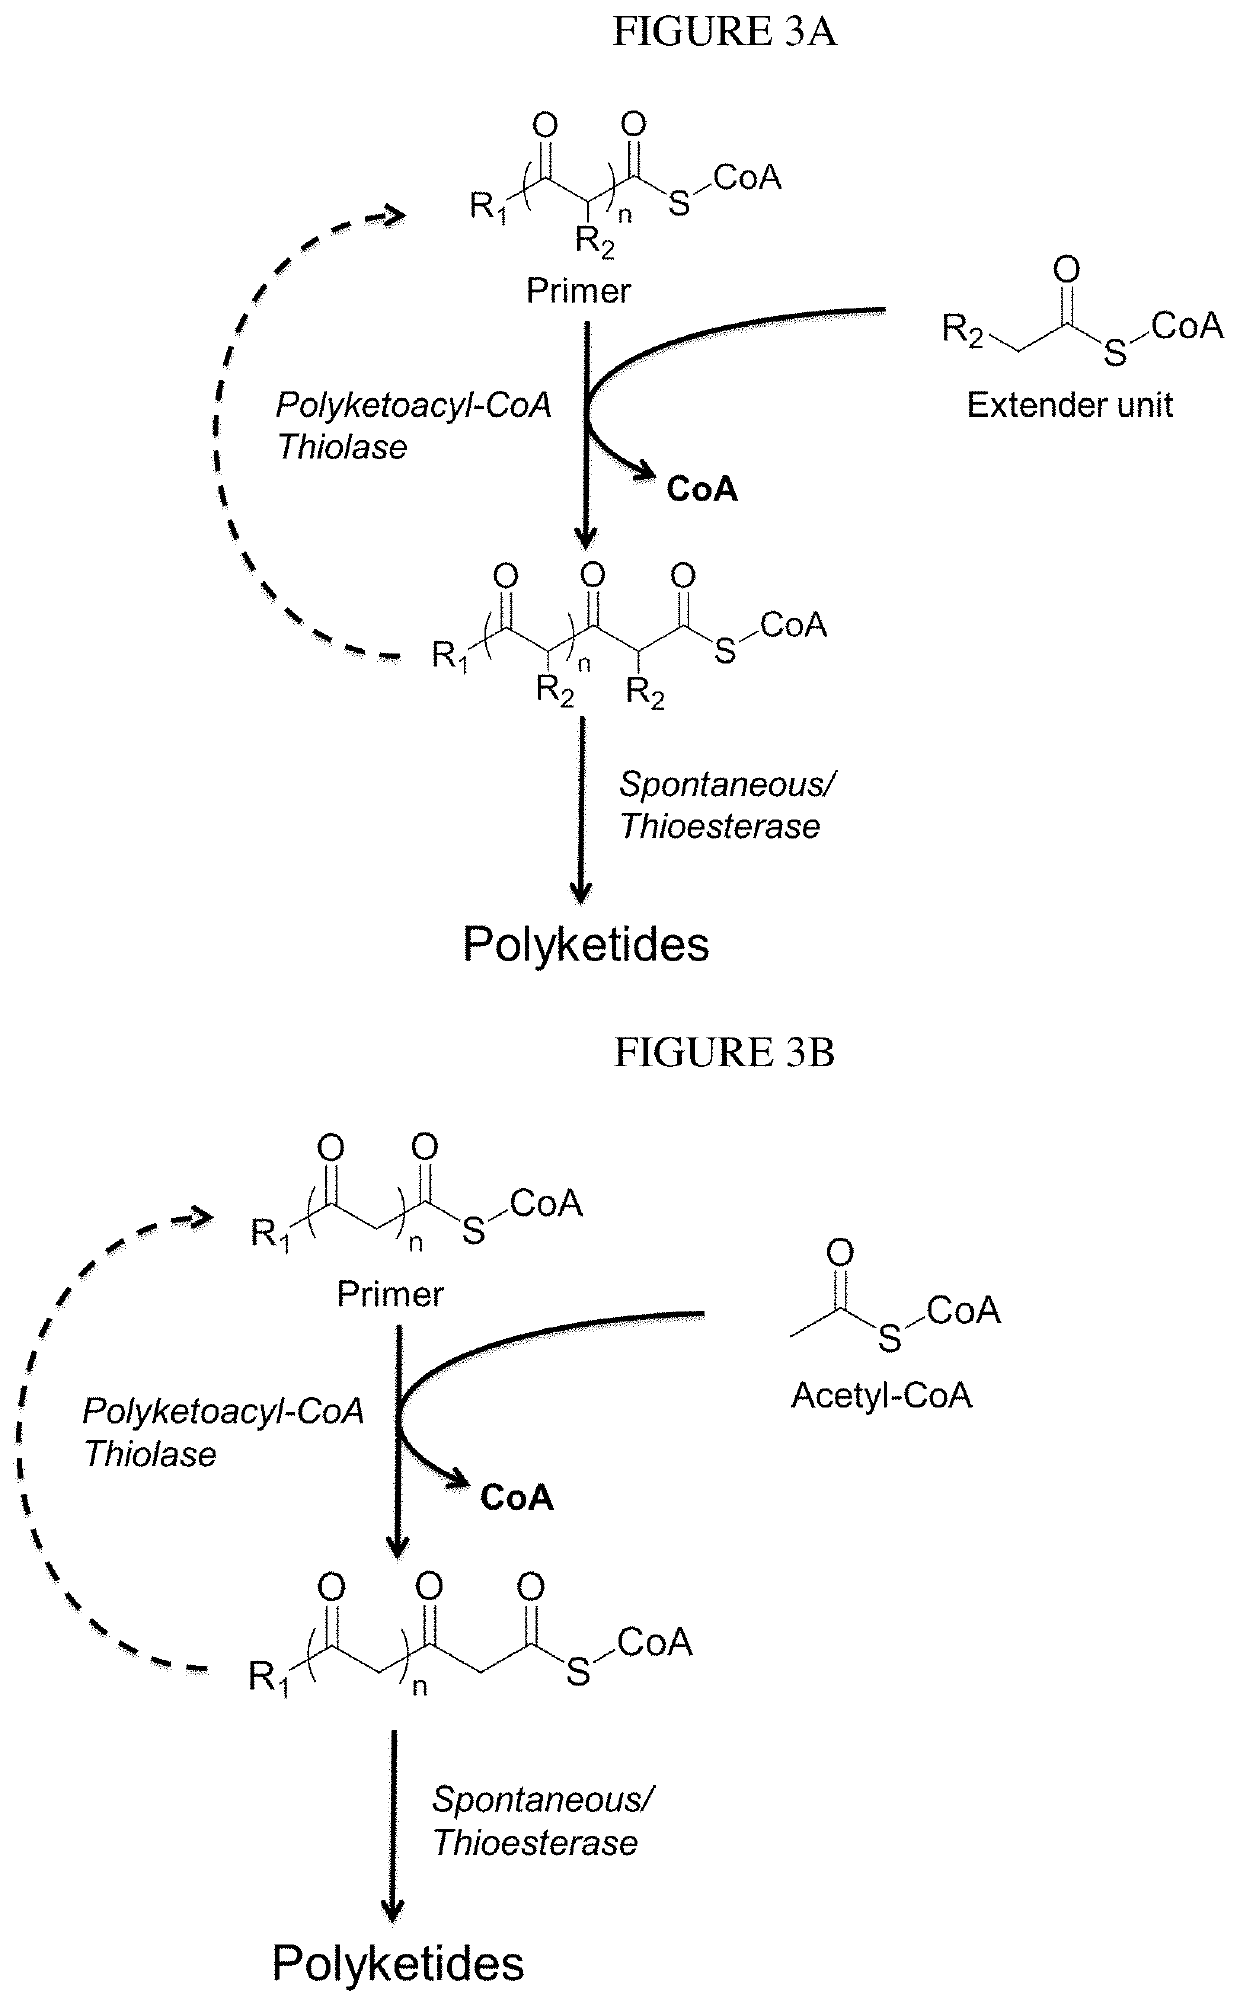 Biosynthesis of polyketides